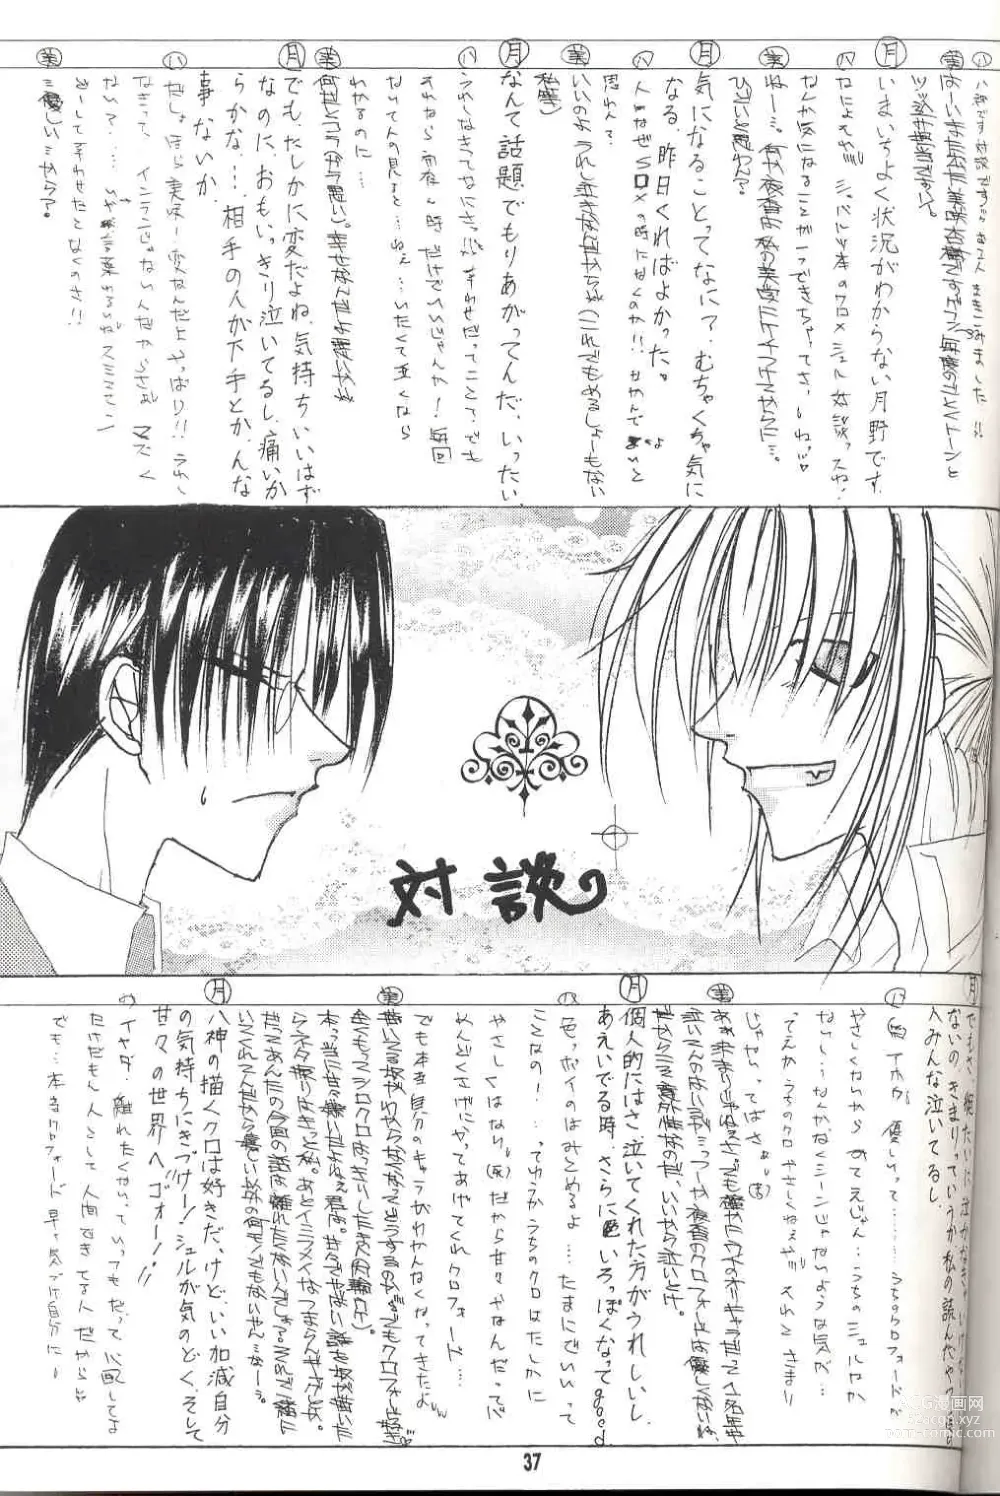 Page 36 of doujinshi Sentimental